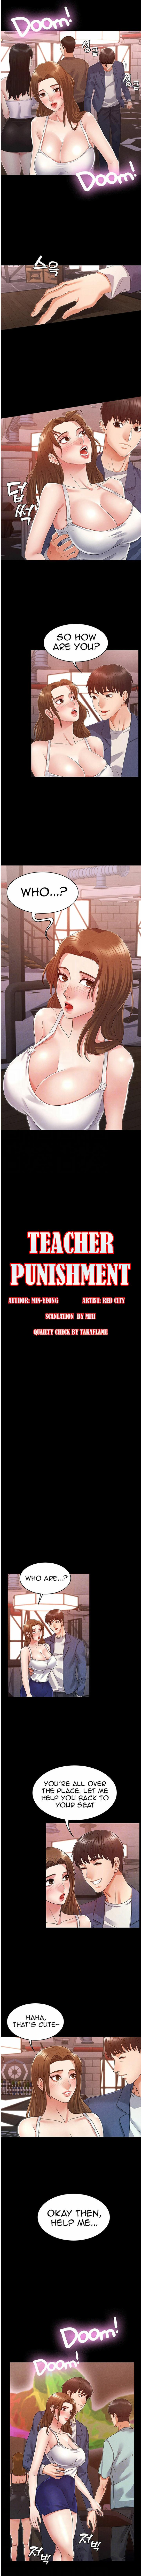 TEACHER PUNISHMENT Ch.1-15 11